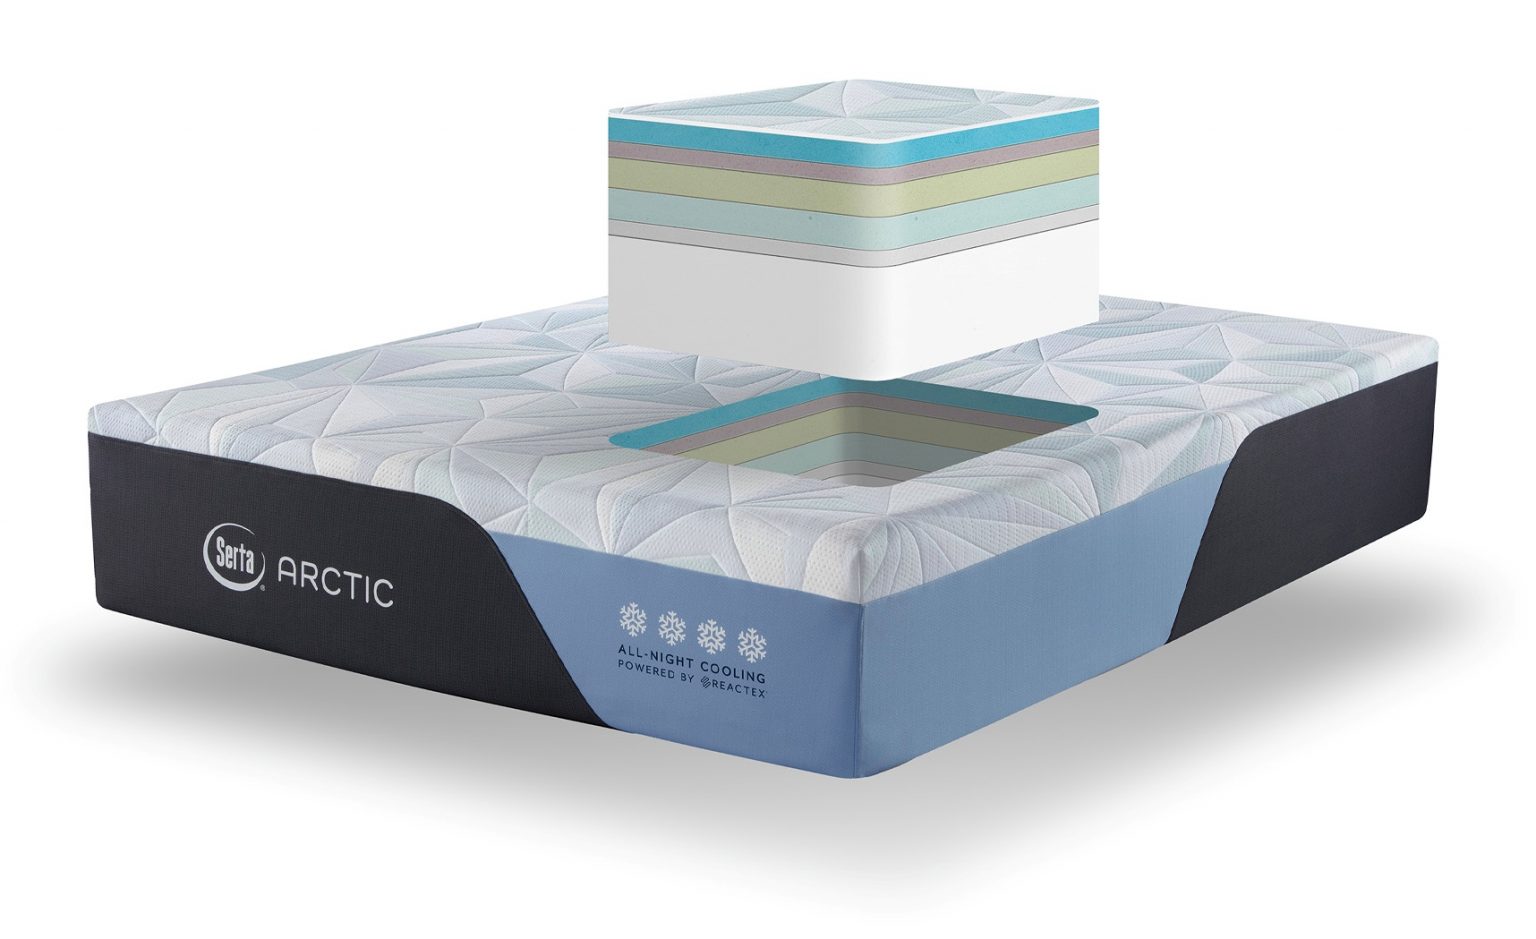 serta arctic premier hybrid mattress 14.5 inch